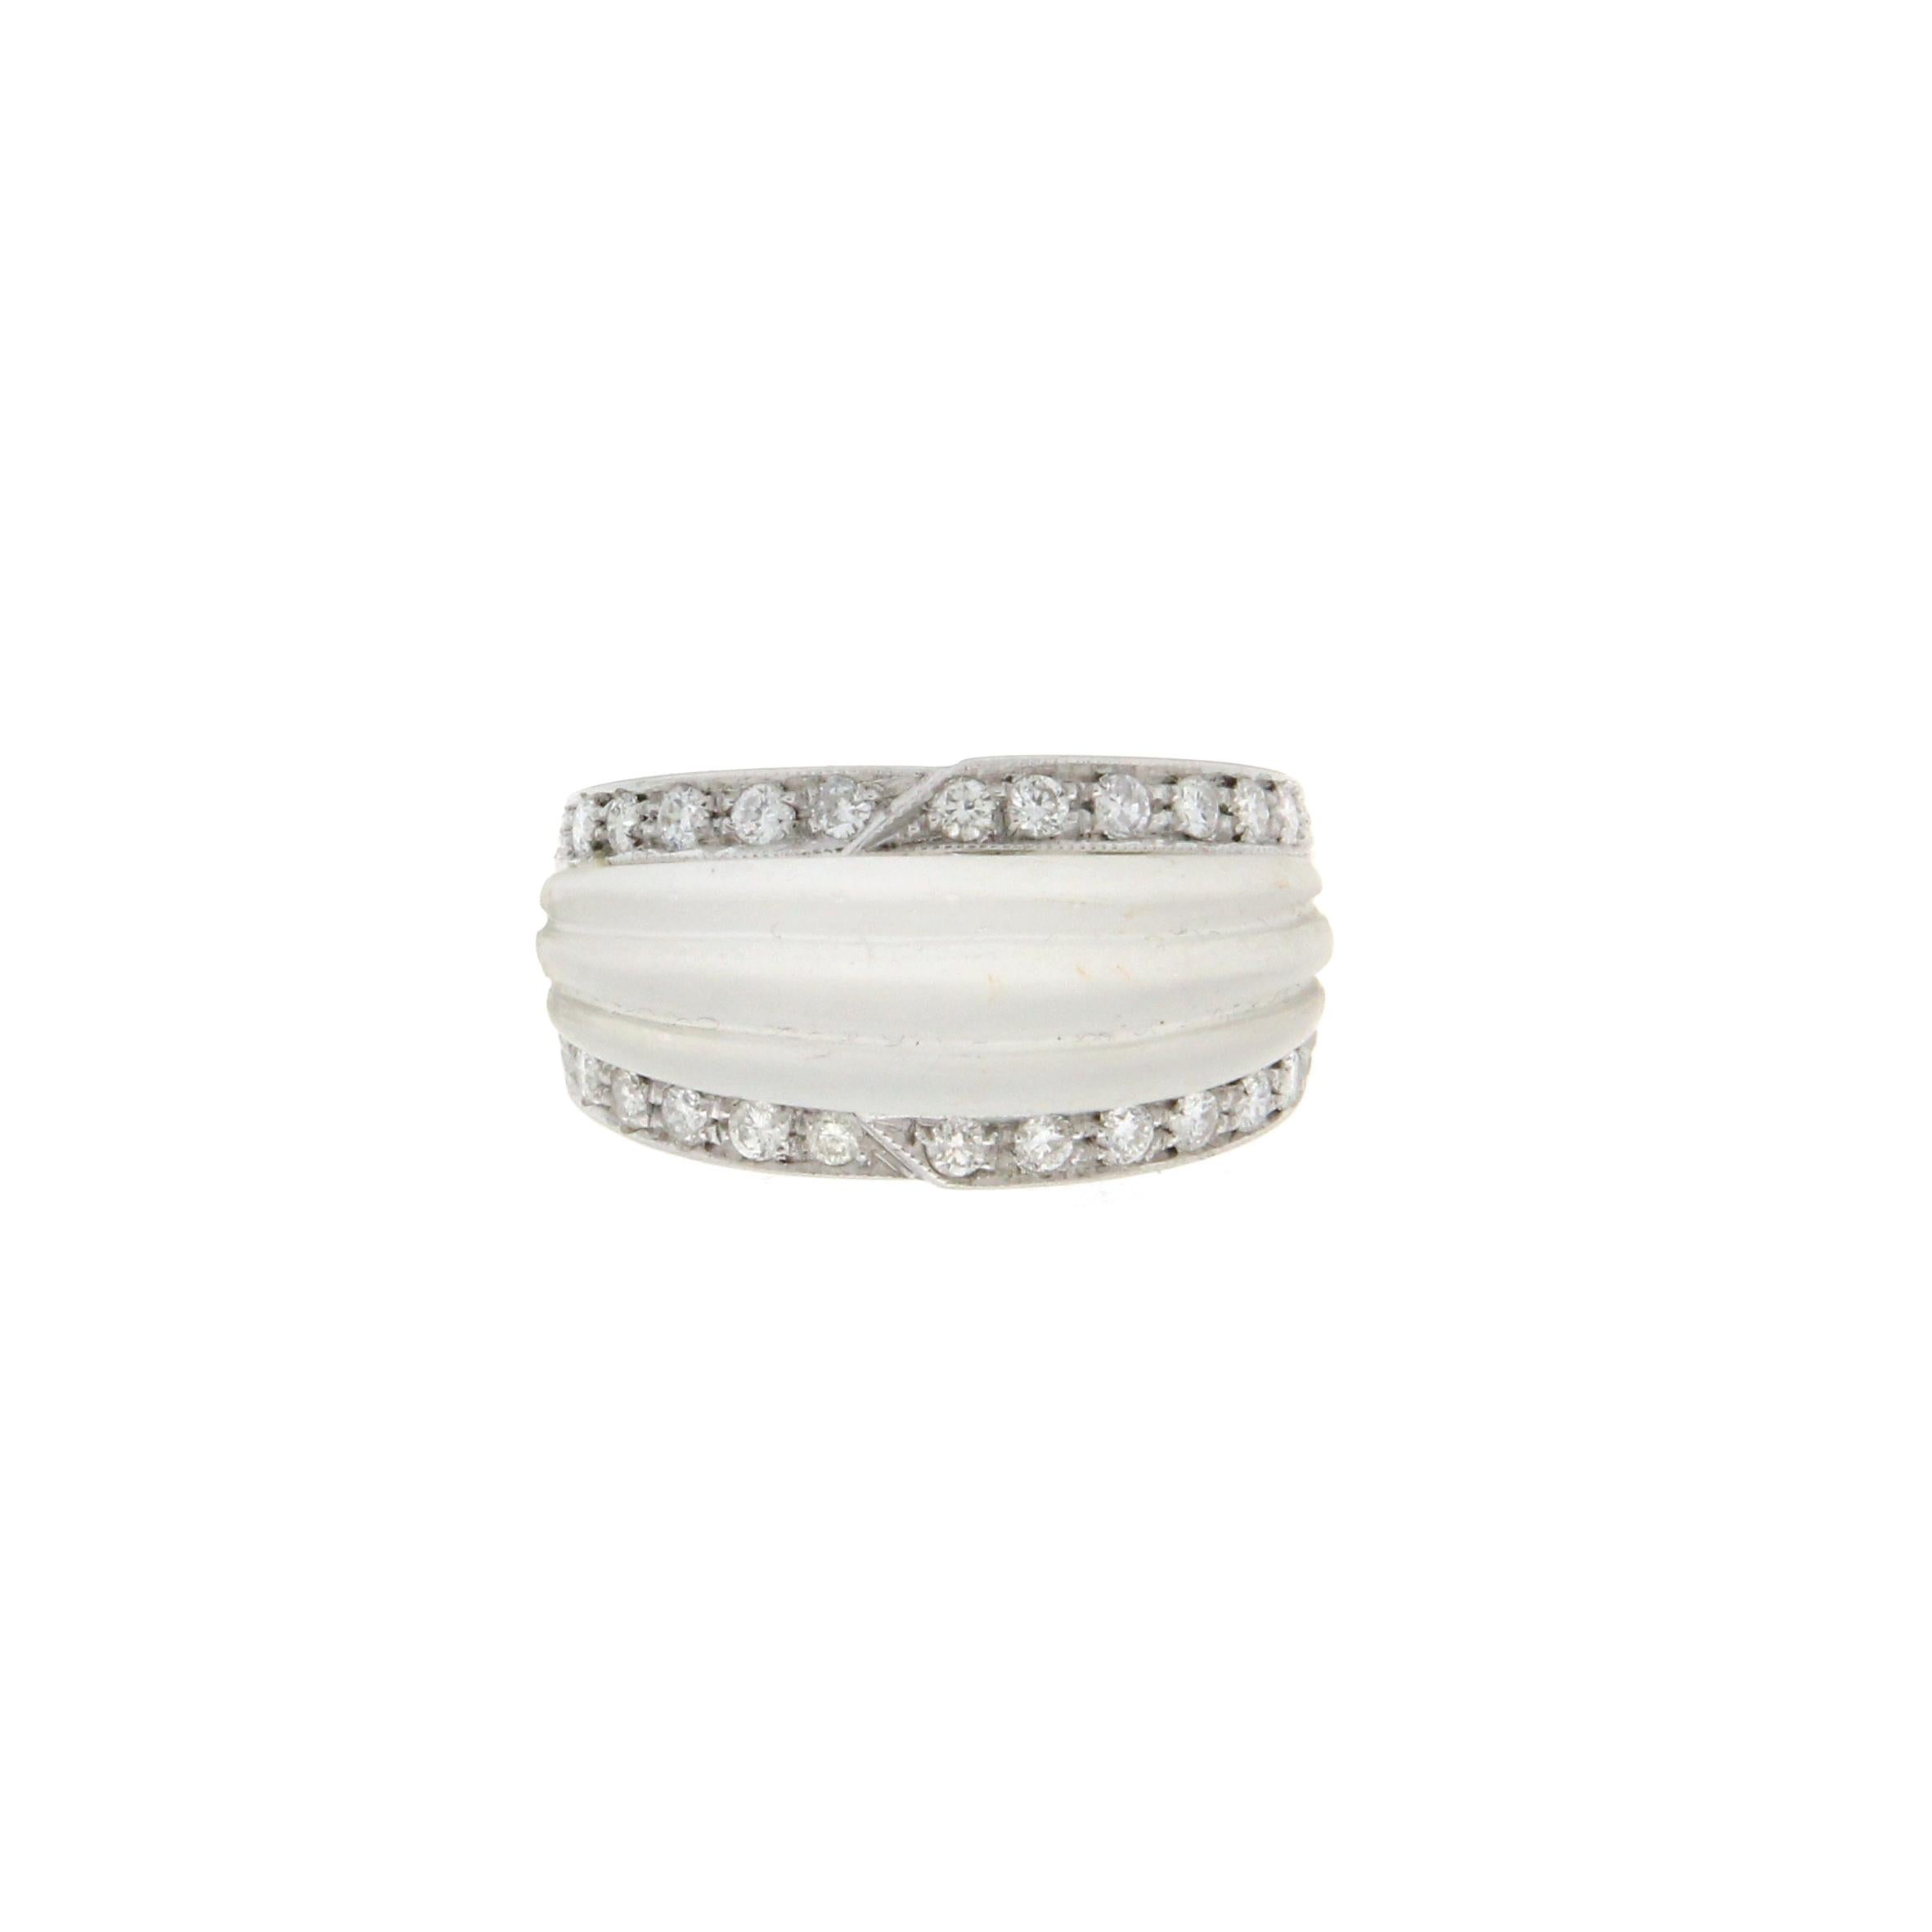 Artisan Handcraft Rock Crystal 18 Karat White Gold Diamonds Cocktail Ring For Sale